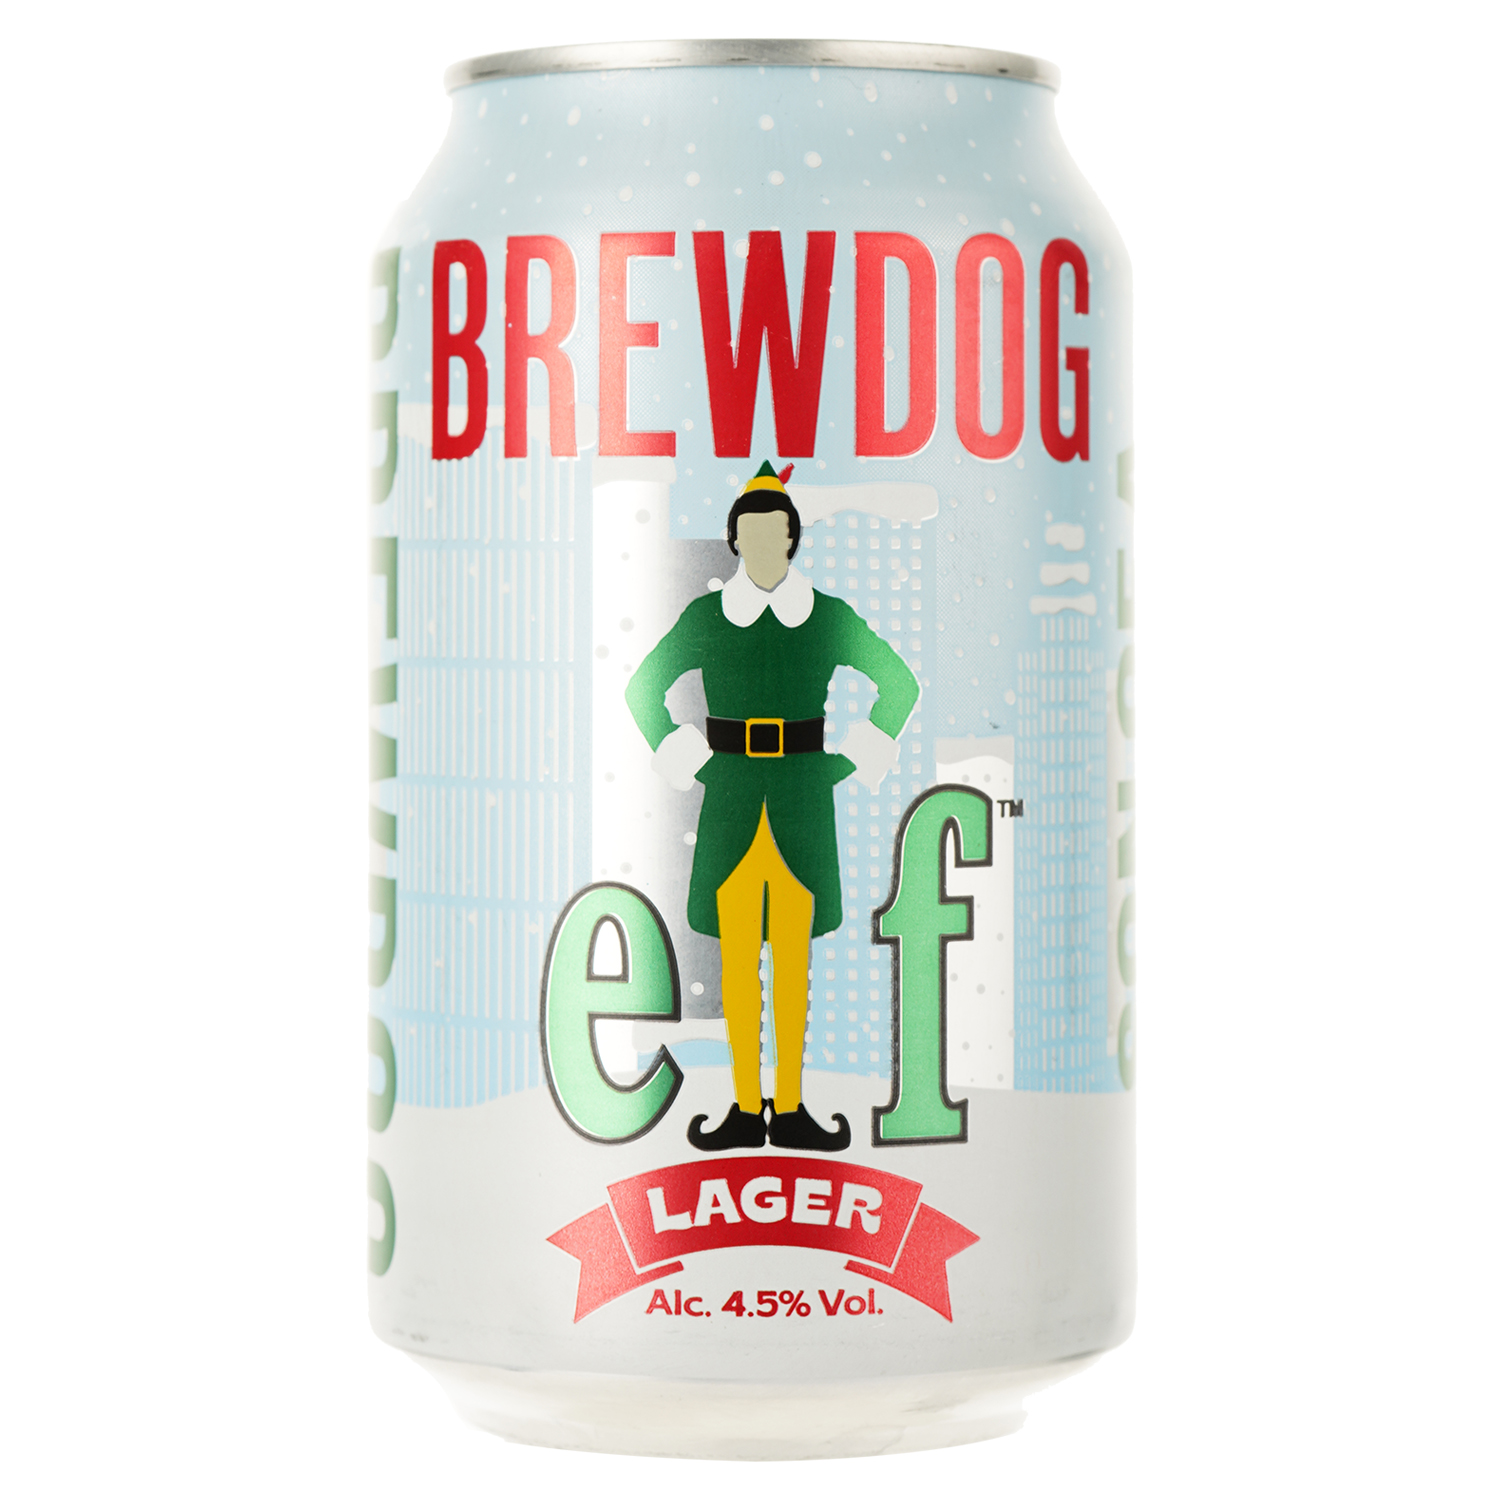 Пиво BrewDog Elf Lager светлое 4.5% ж/б 0.33 л - фото 1